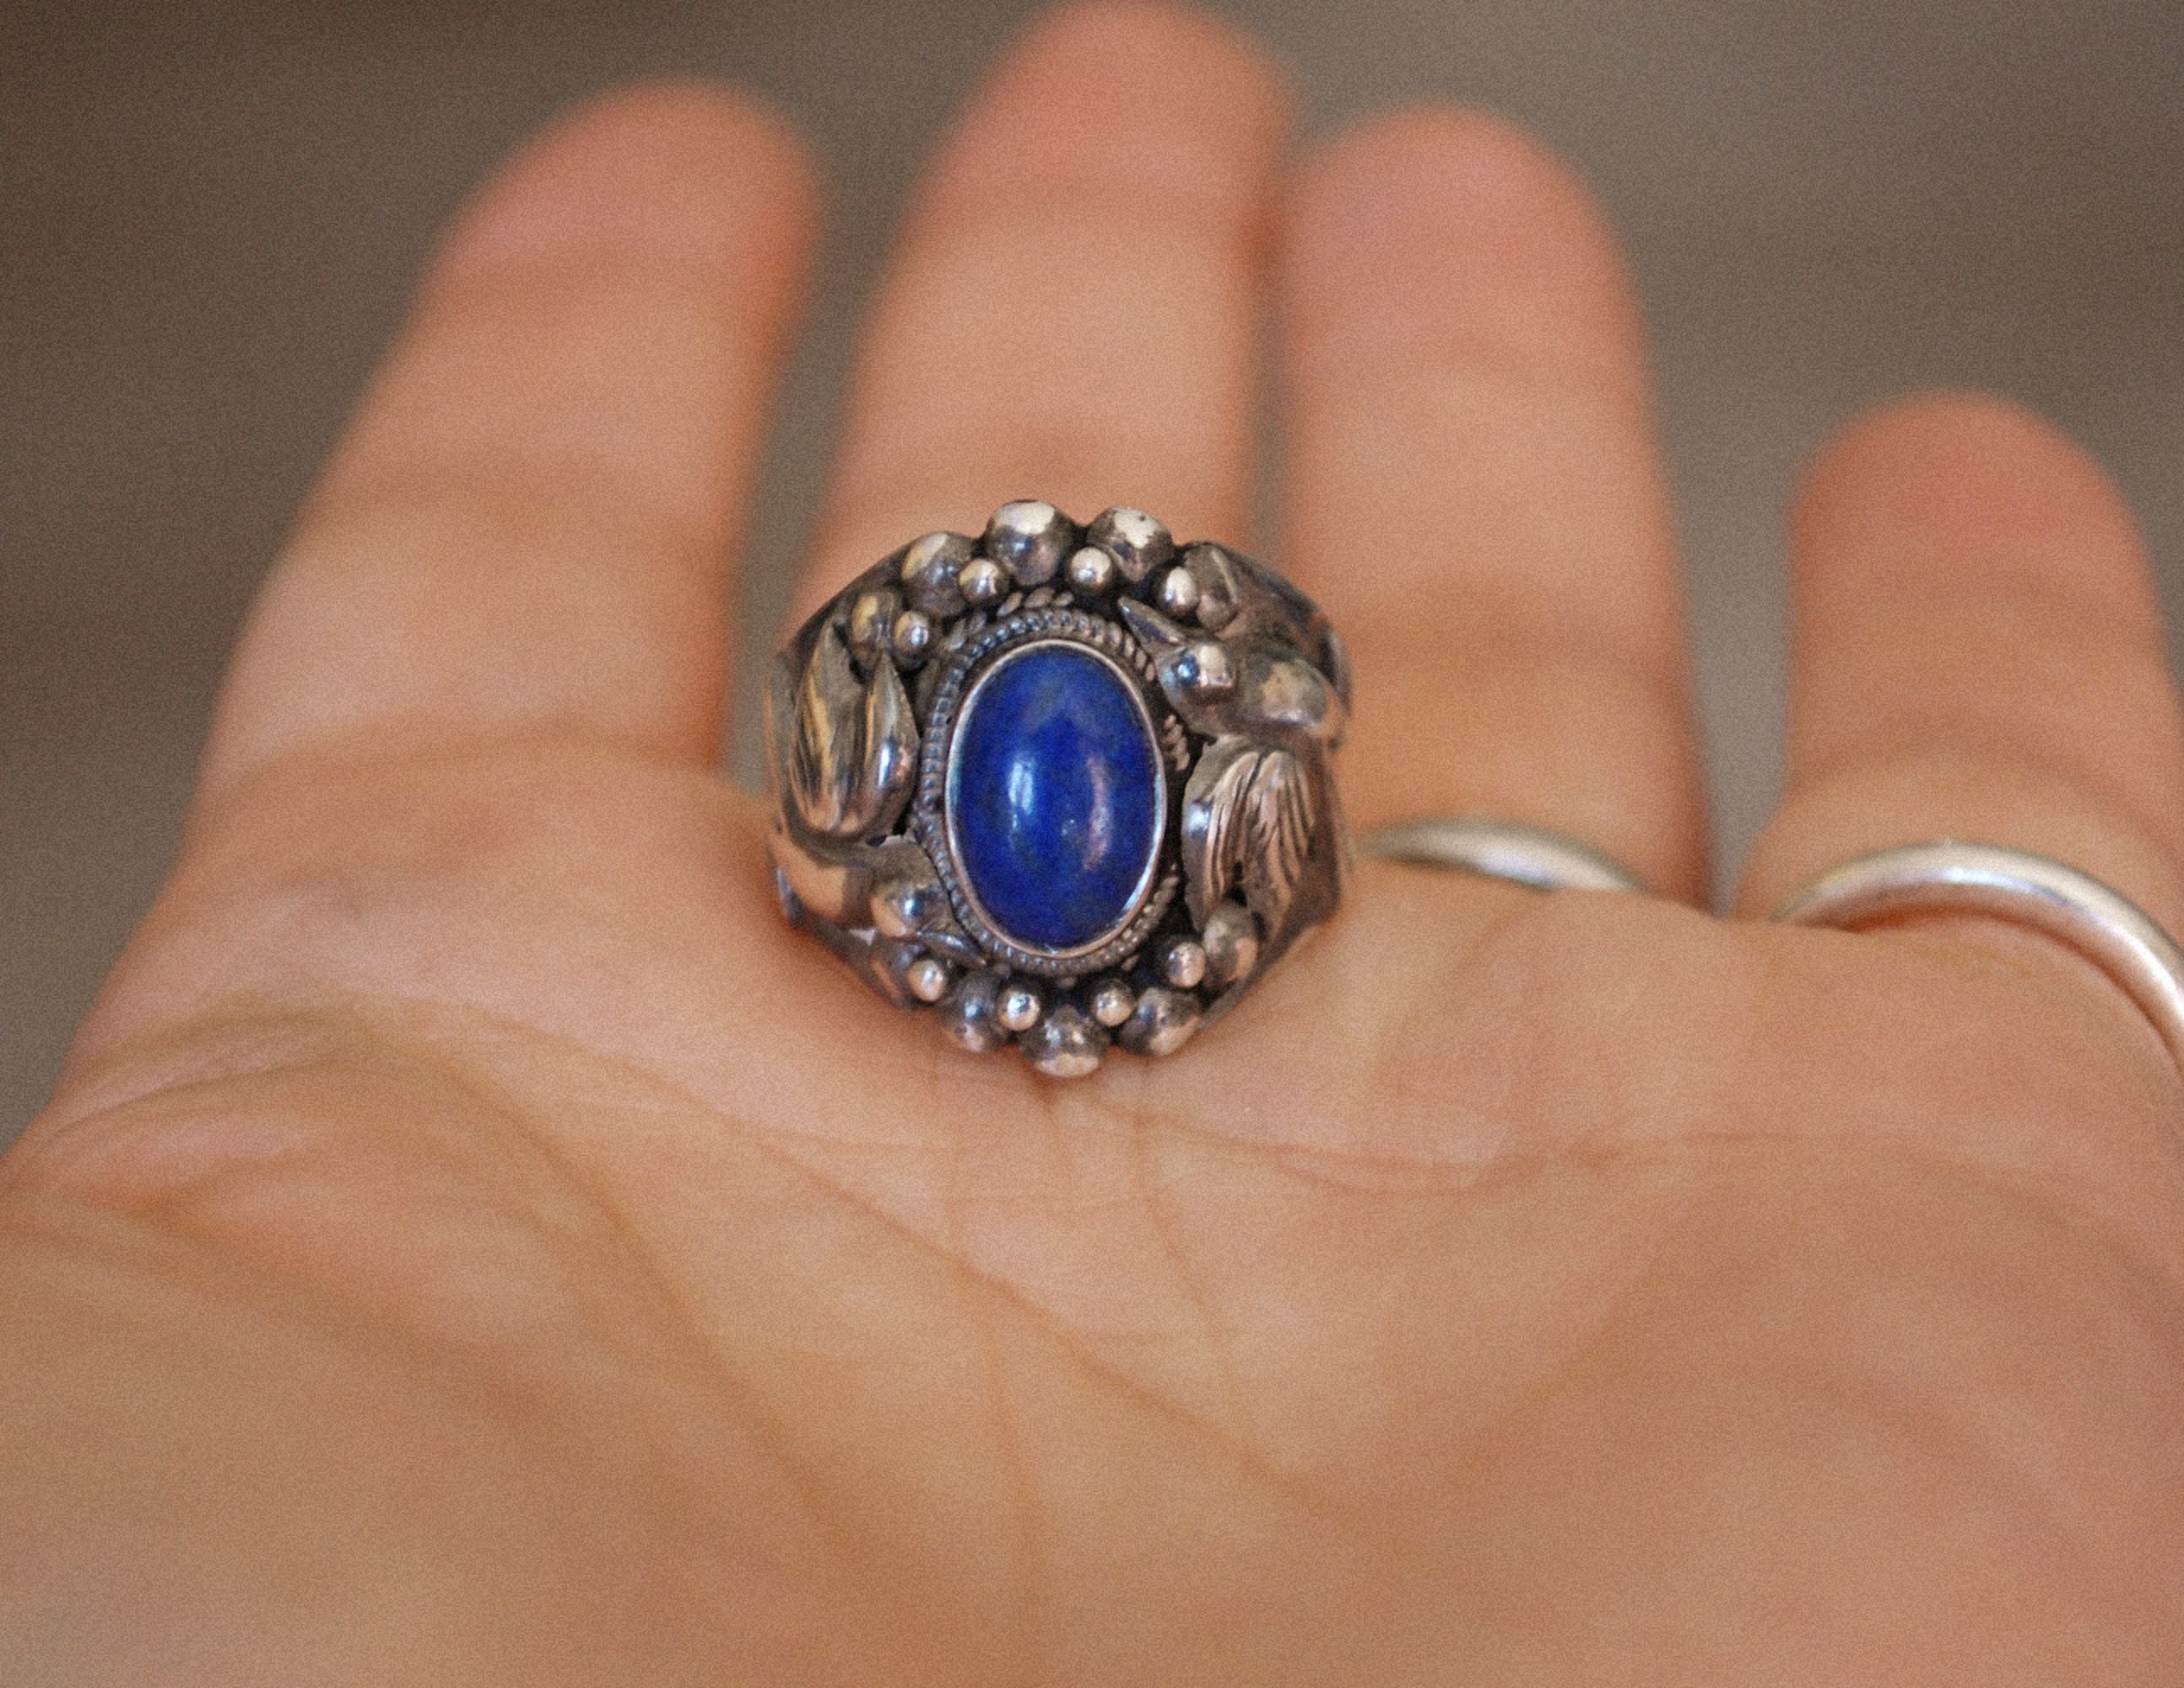 Ethnic Lapis Lazuli Ring from India with Birds - Size 6.75